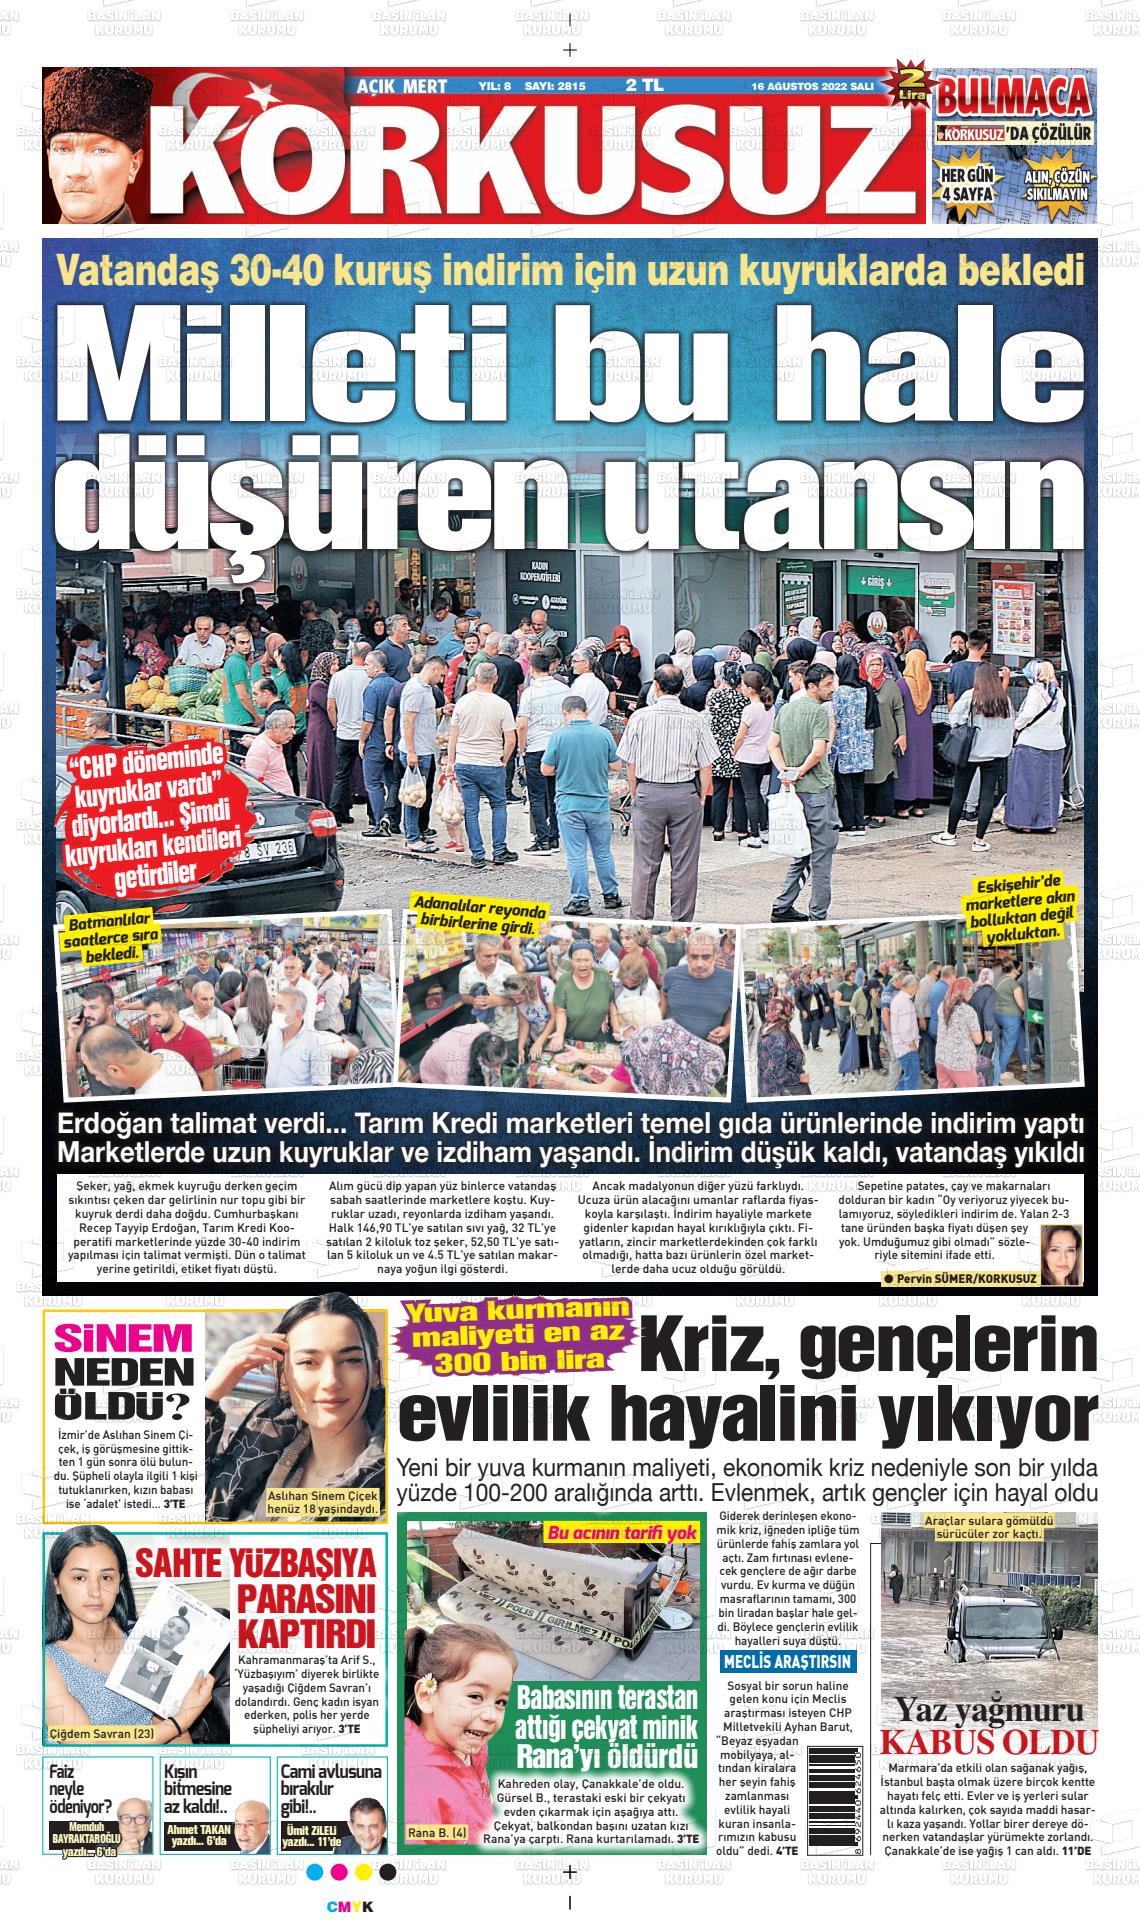 16 Ağustos 2022 Korkusuz Gazete Gazete Manşeti